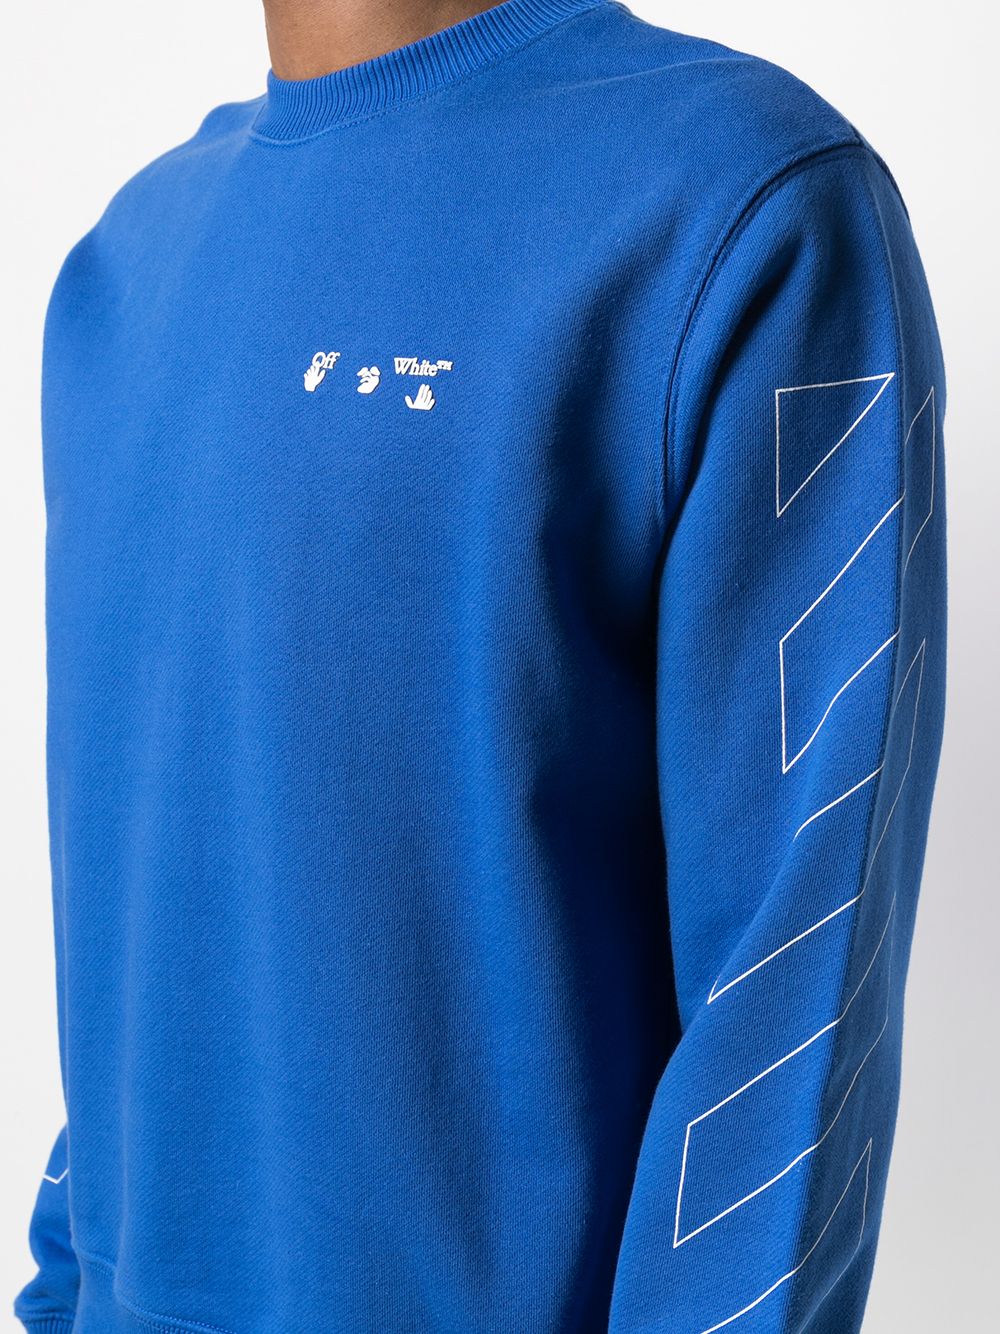 Diag crewneck sweatshirt blue/white